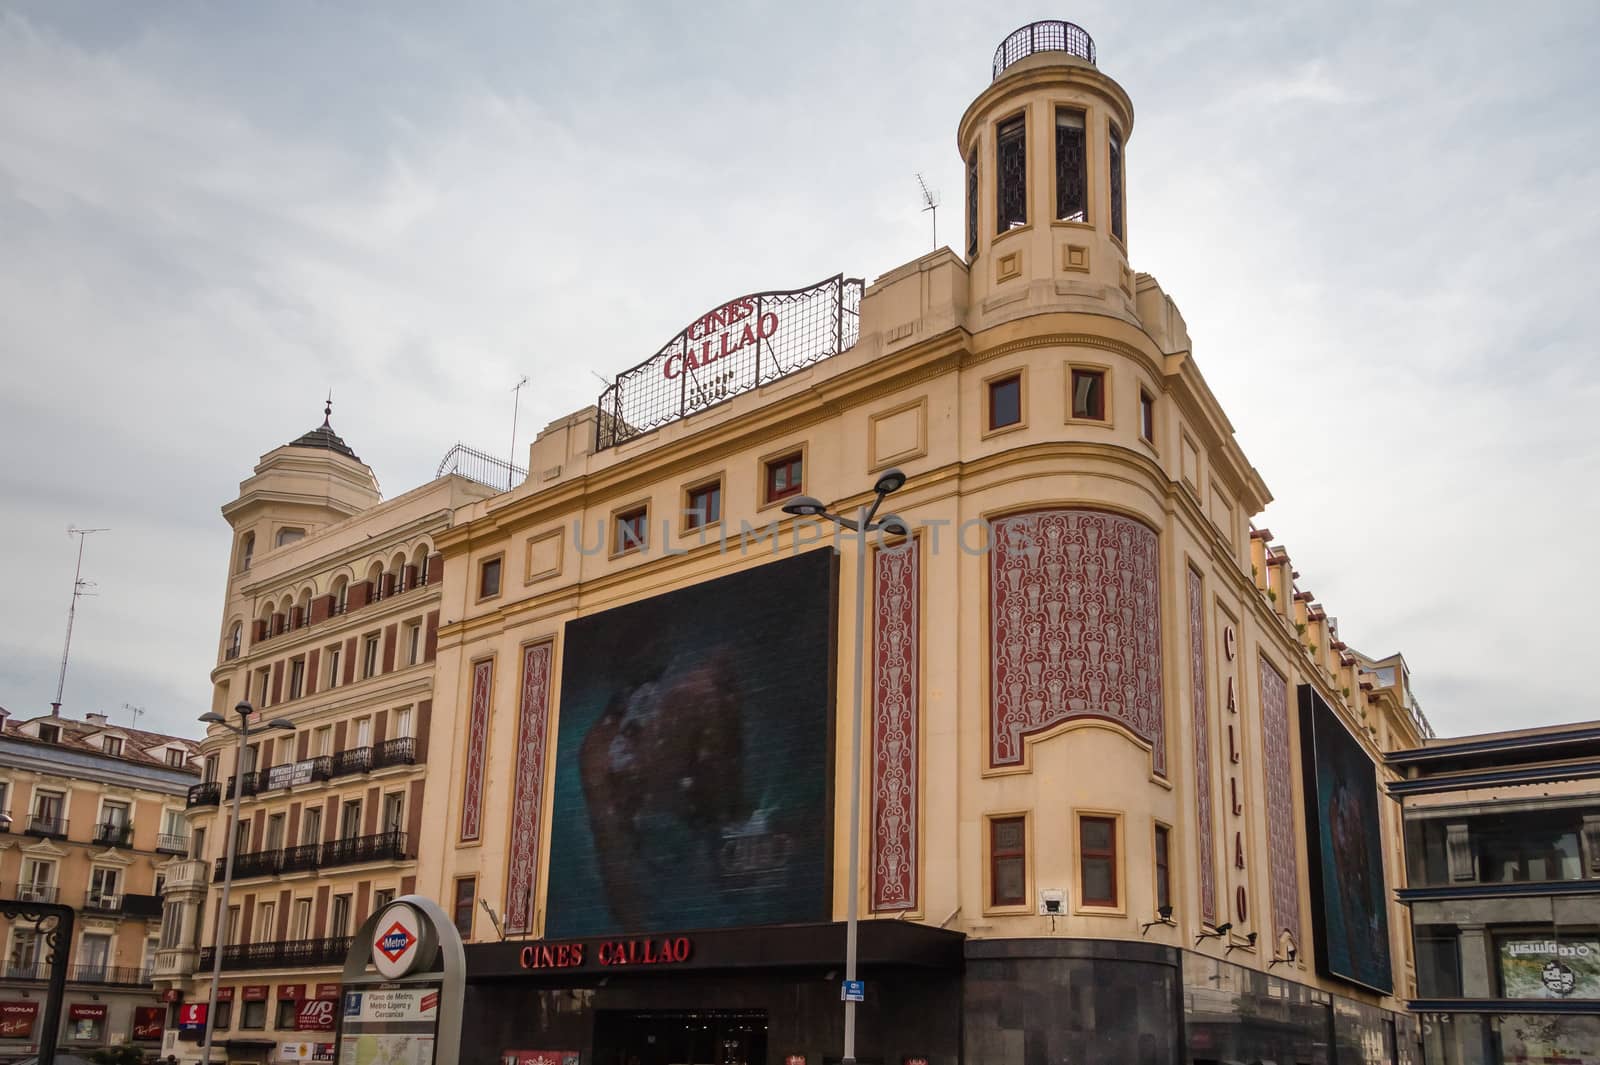 View of Callao cinemas in Gran Via street, in Madrid, Spain by doble.d